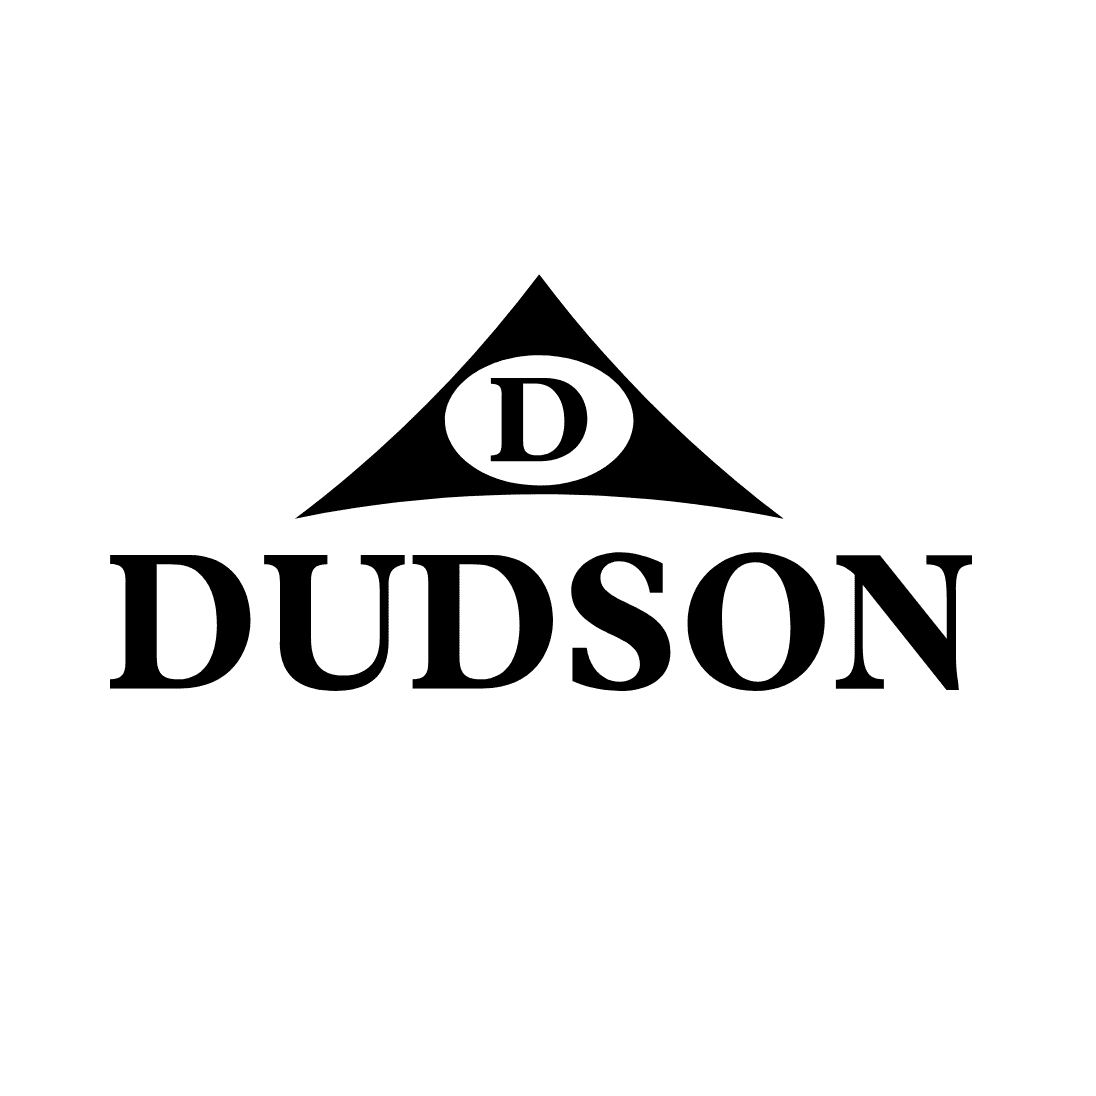 Dudson